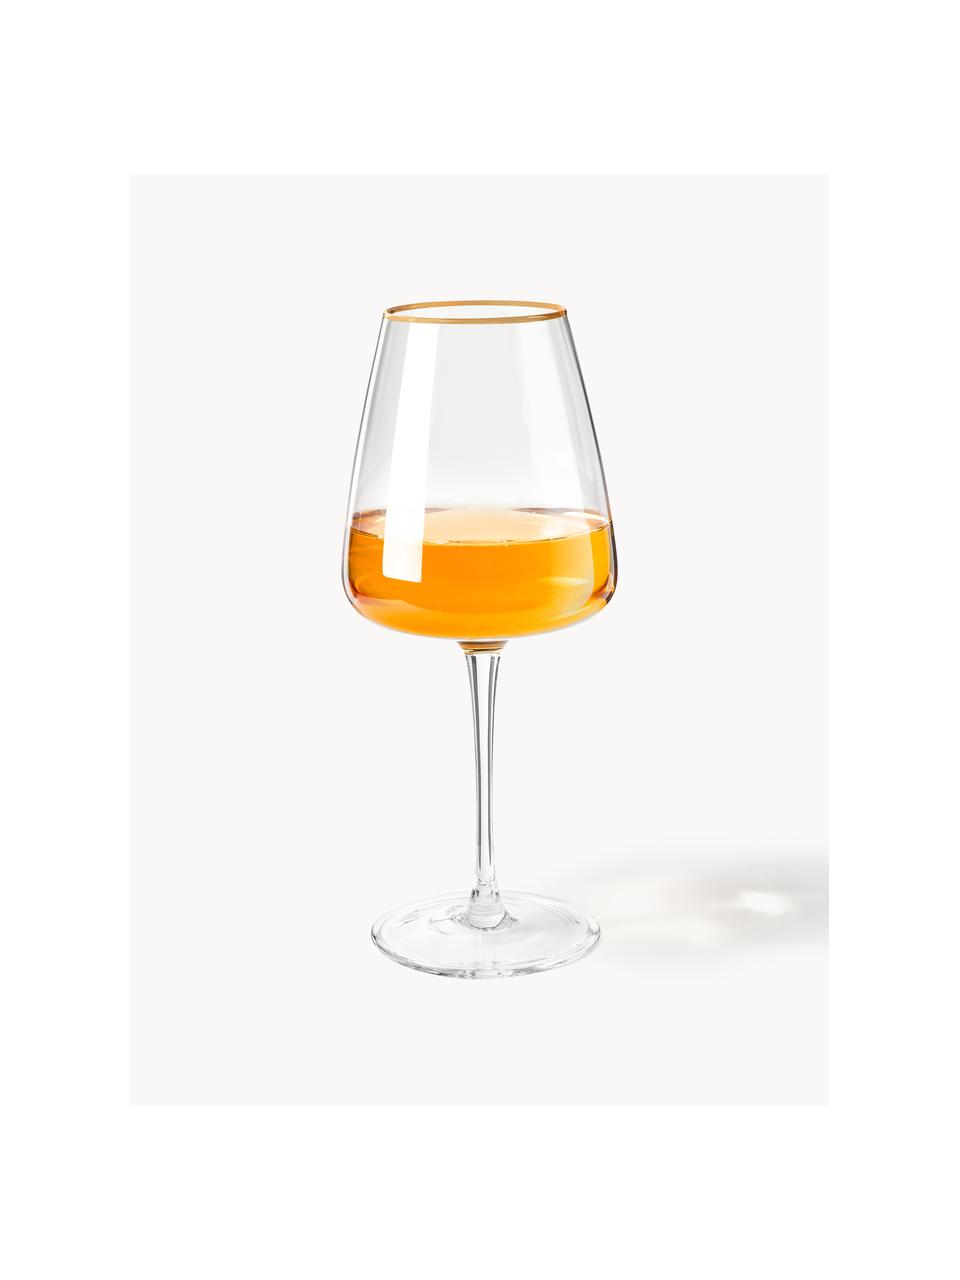 Bicchieri da vino bianco in vetro soffiato Ellery 4 pz